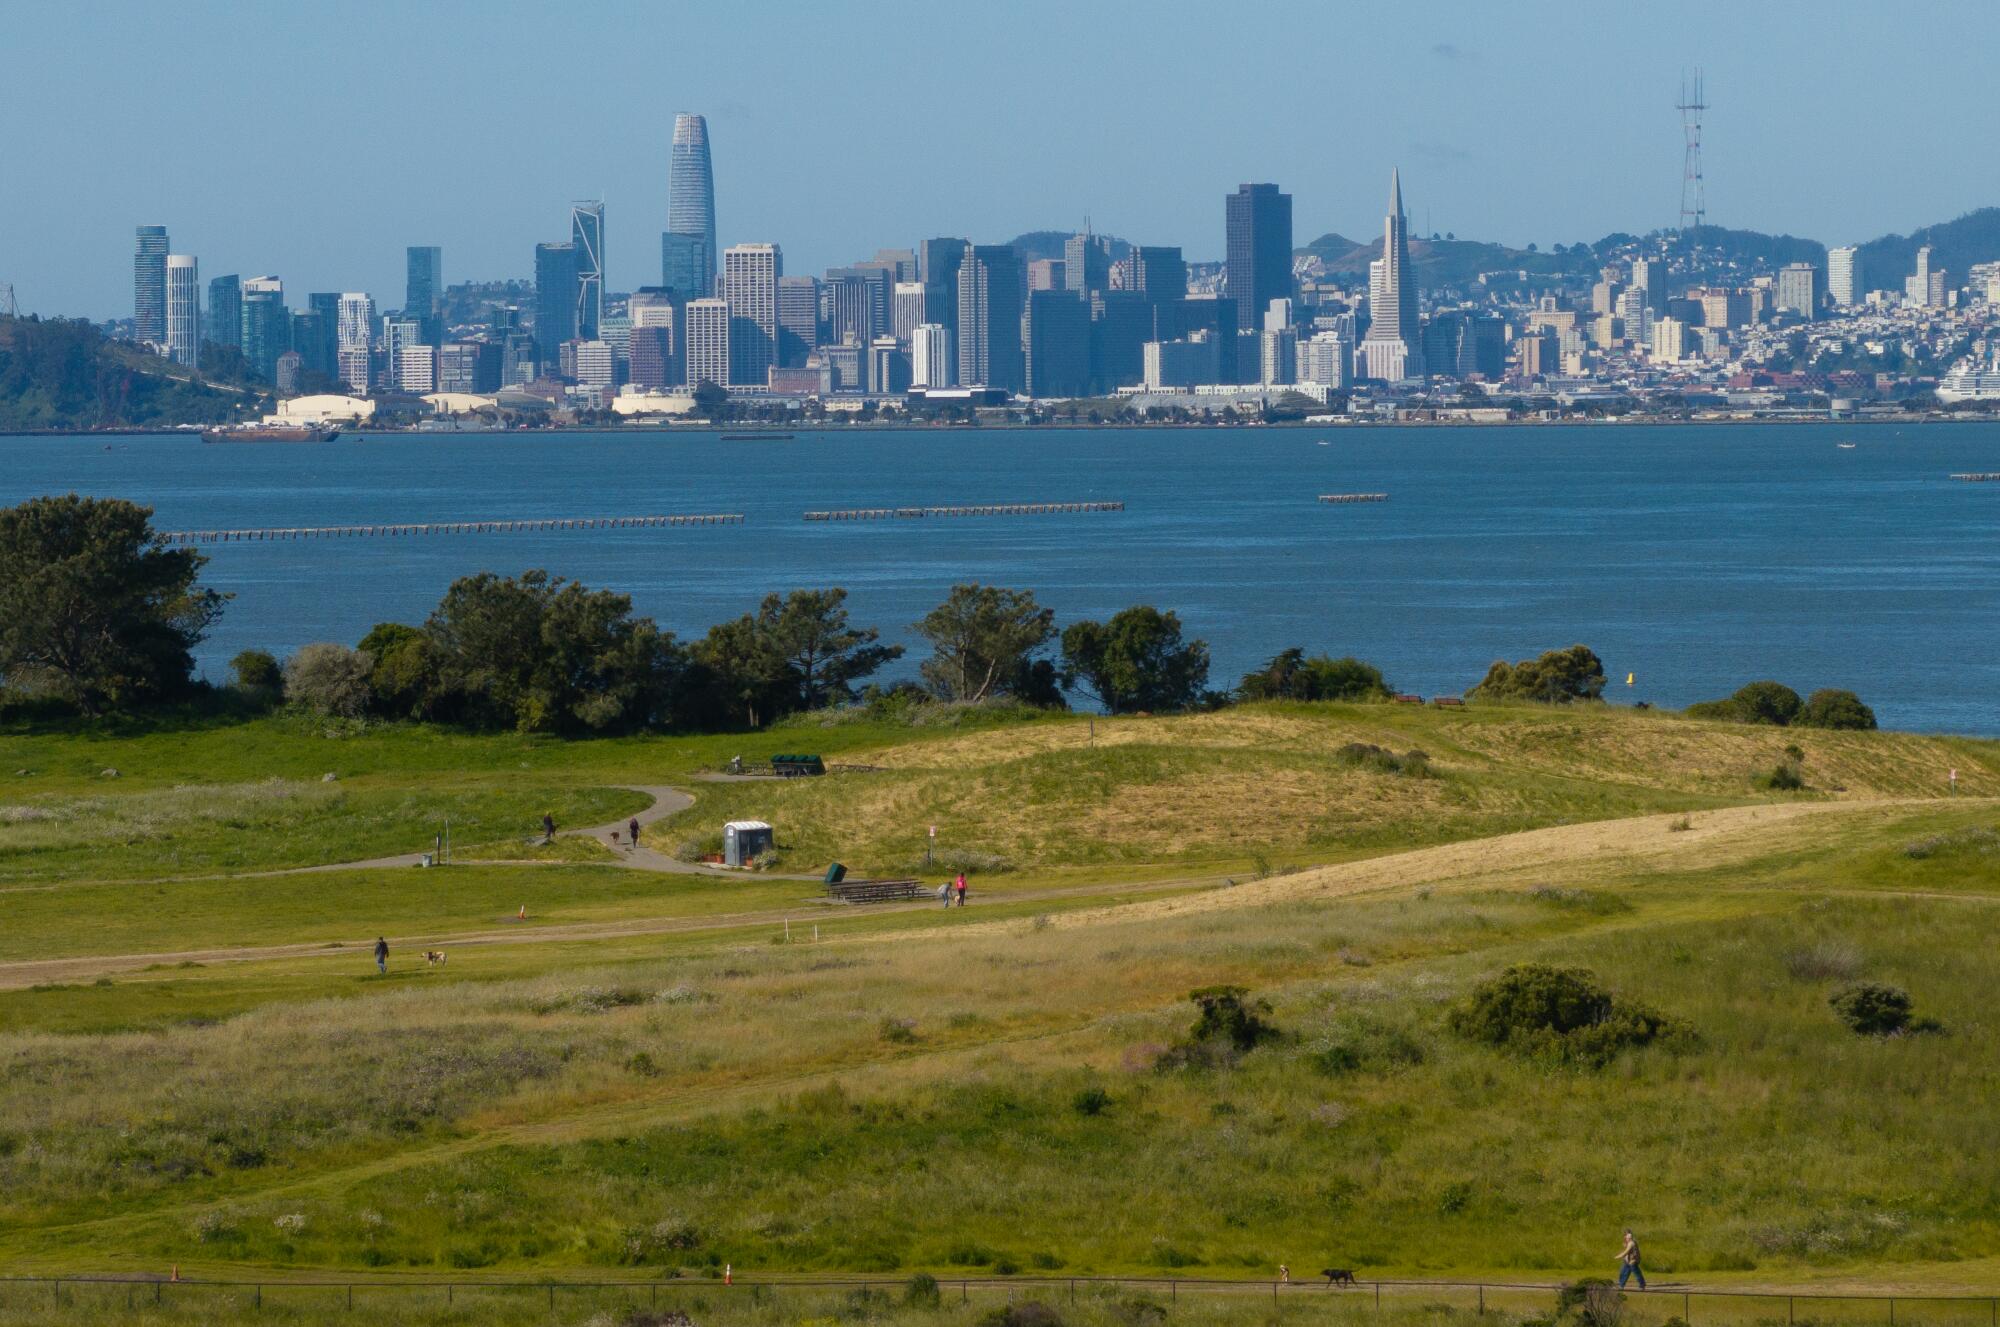 The San Francisco skyline rises beyond the bay, seen from César Chávez Park in Berkeley.